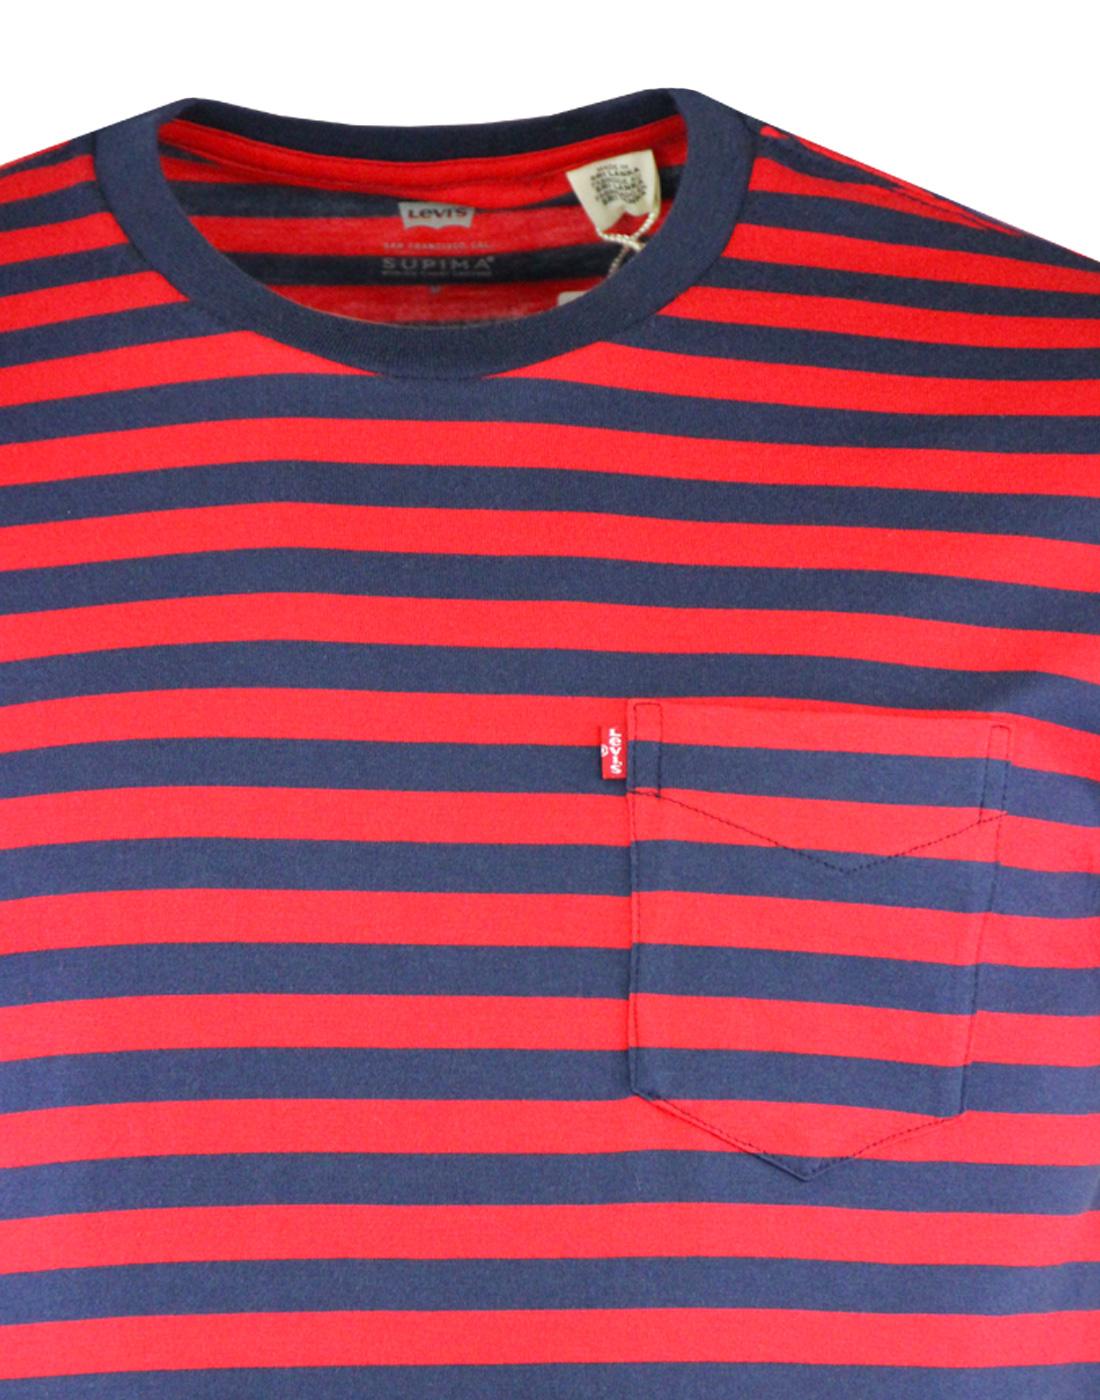 LEVI'S Men's Retro Mod Stripe Sunset Pocket T-Shirt in Red/Navy